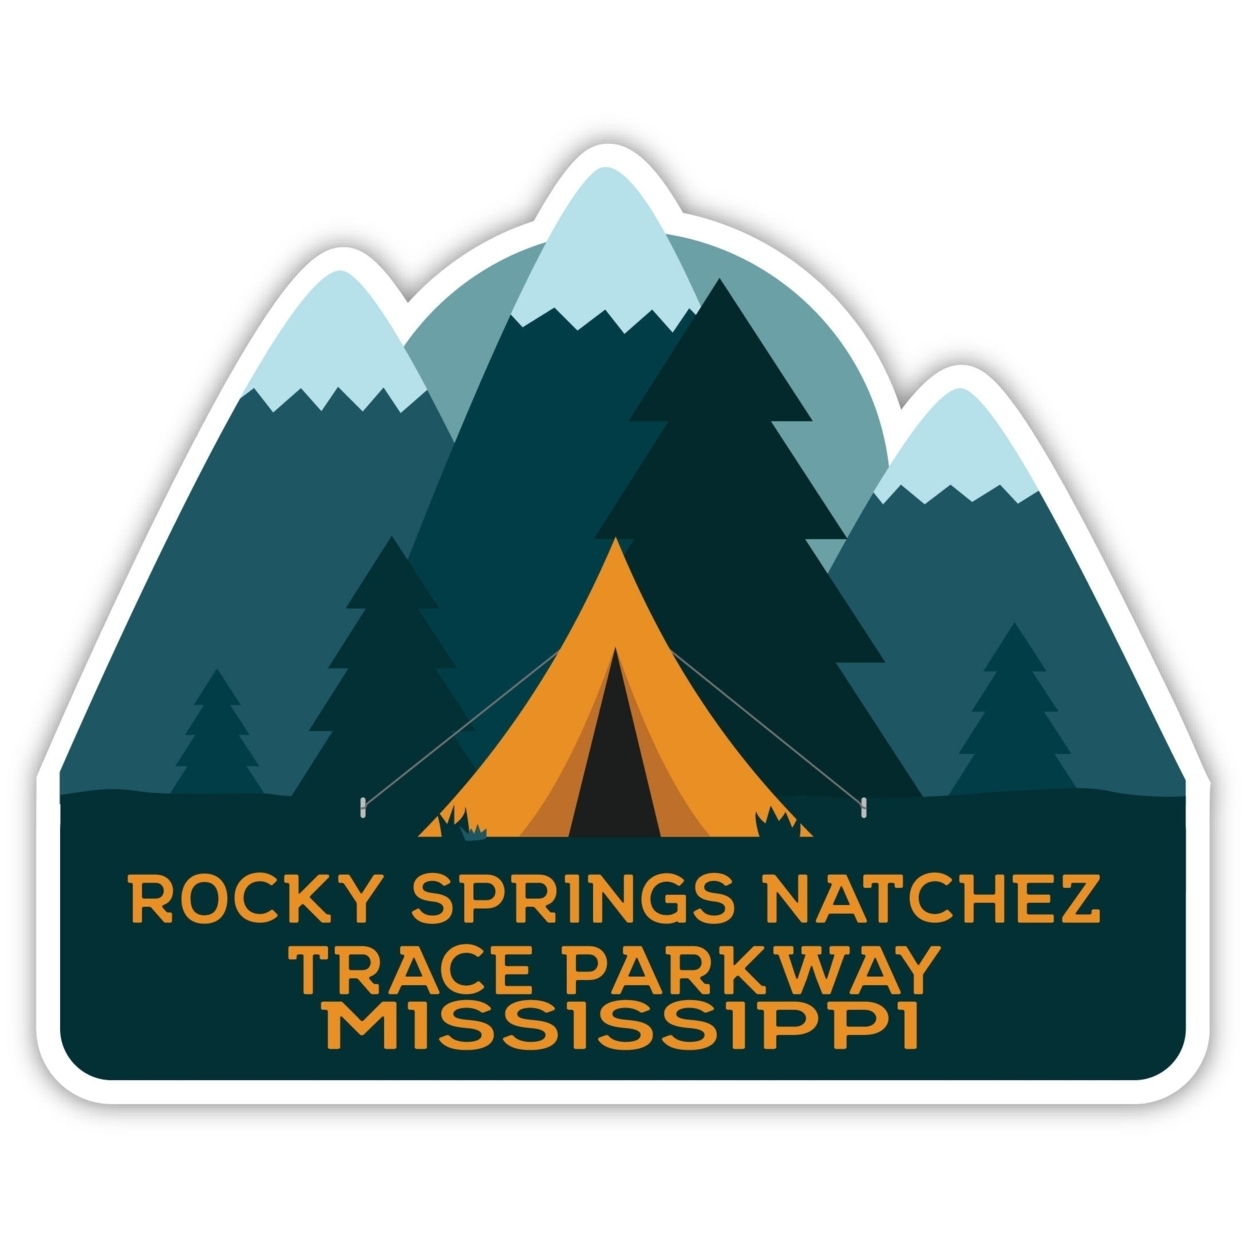 Rocky Springs Natchez Trace Parkway Mississippi Souvenir Decorative Stickers (Choose Theme And Size) - Single Unit, 2-Inch, Tent